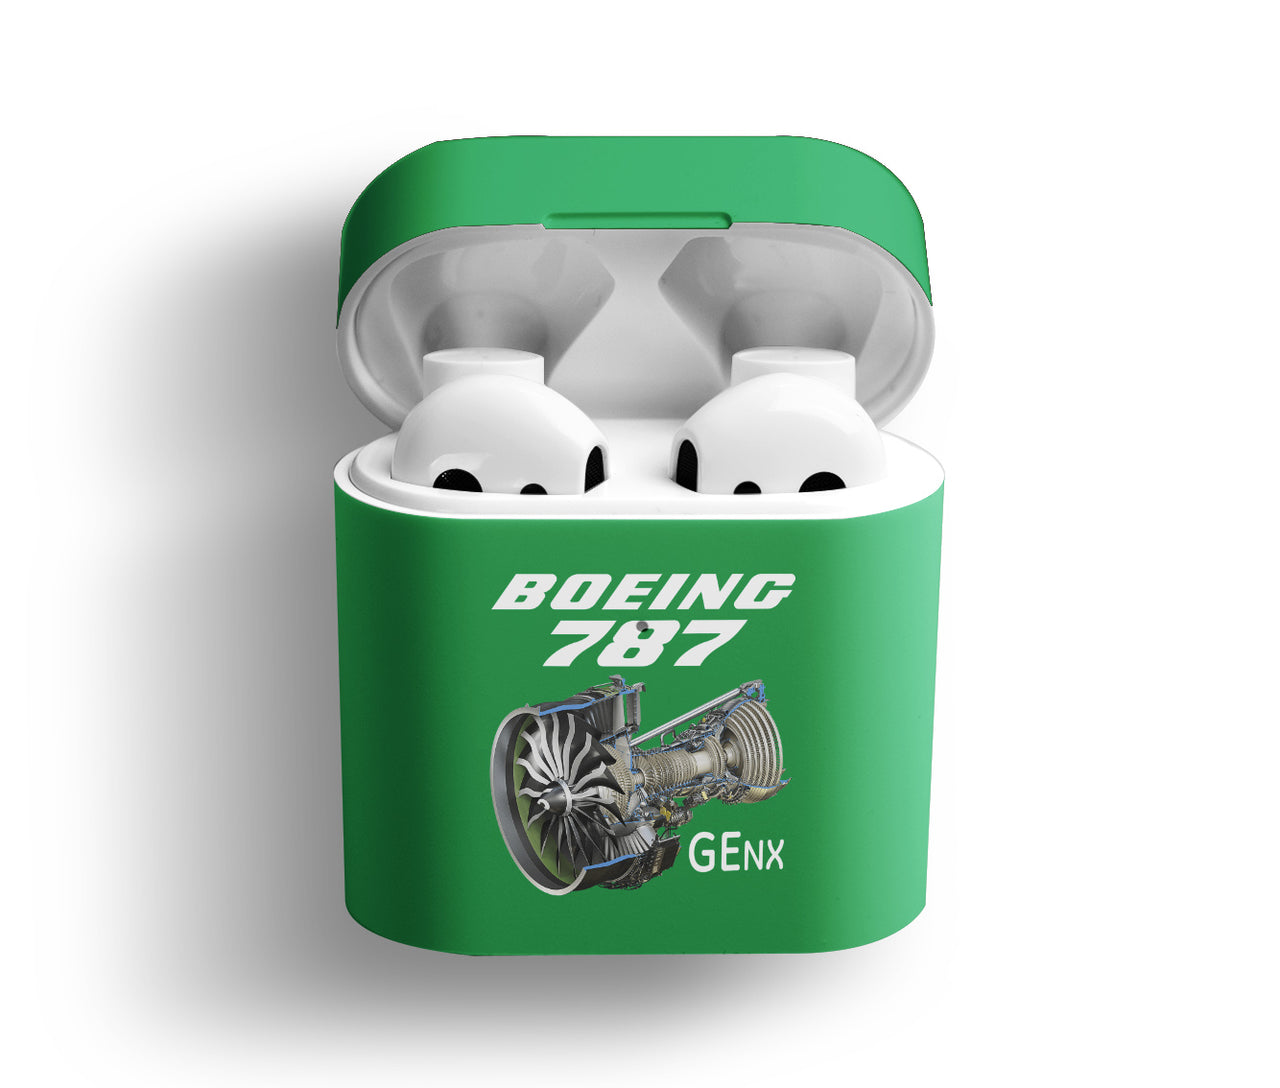 Boeing 787 & GENX Engine Designed AirPods  Cases